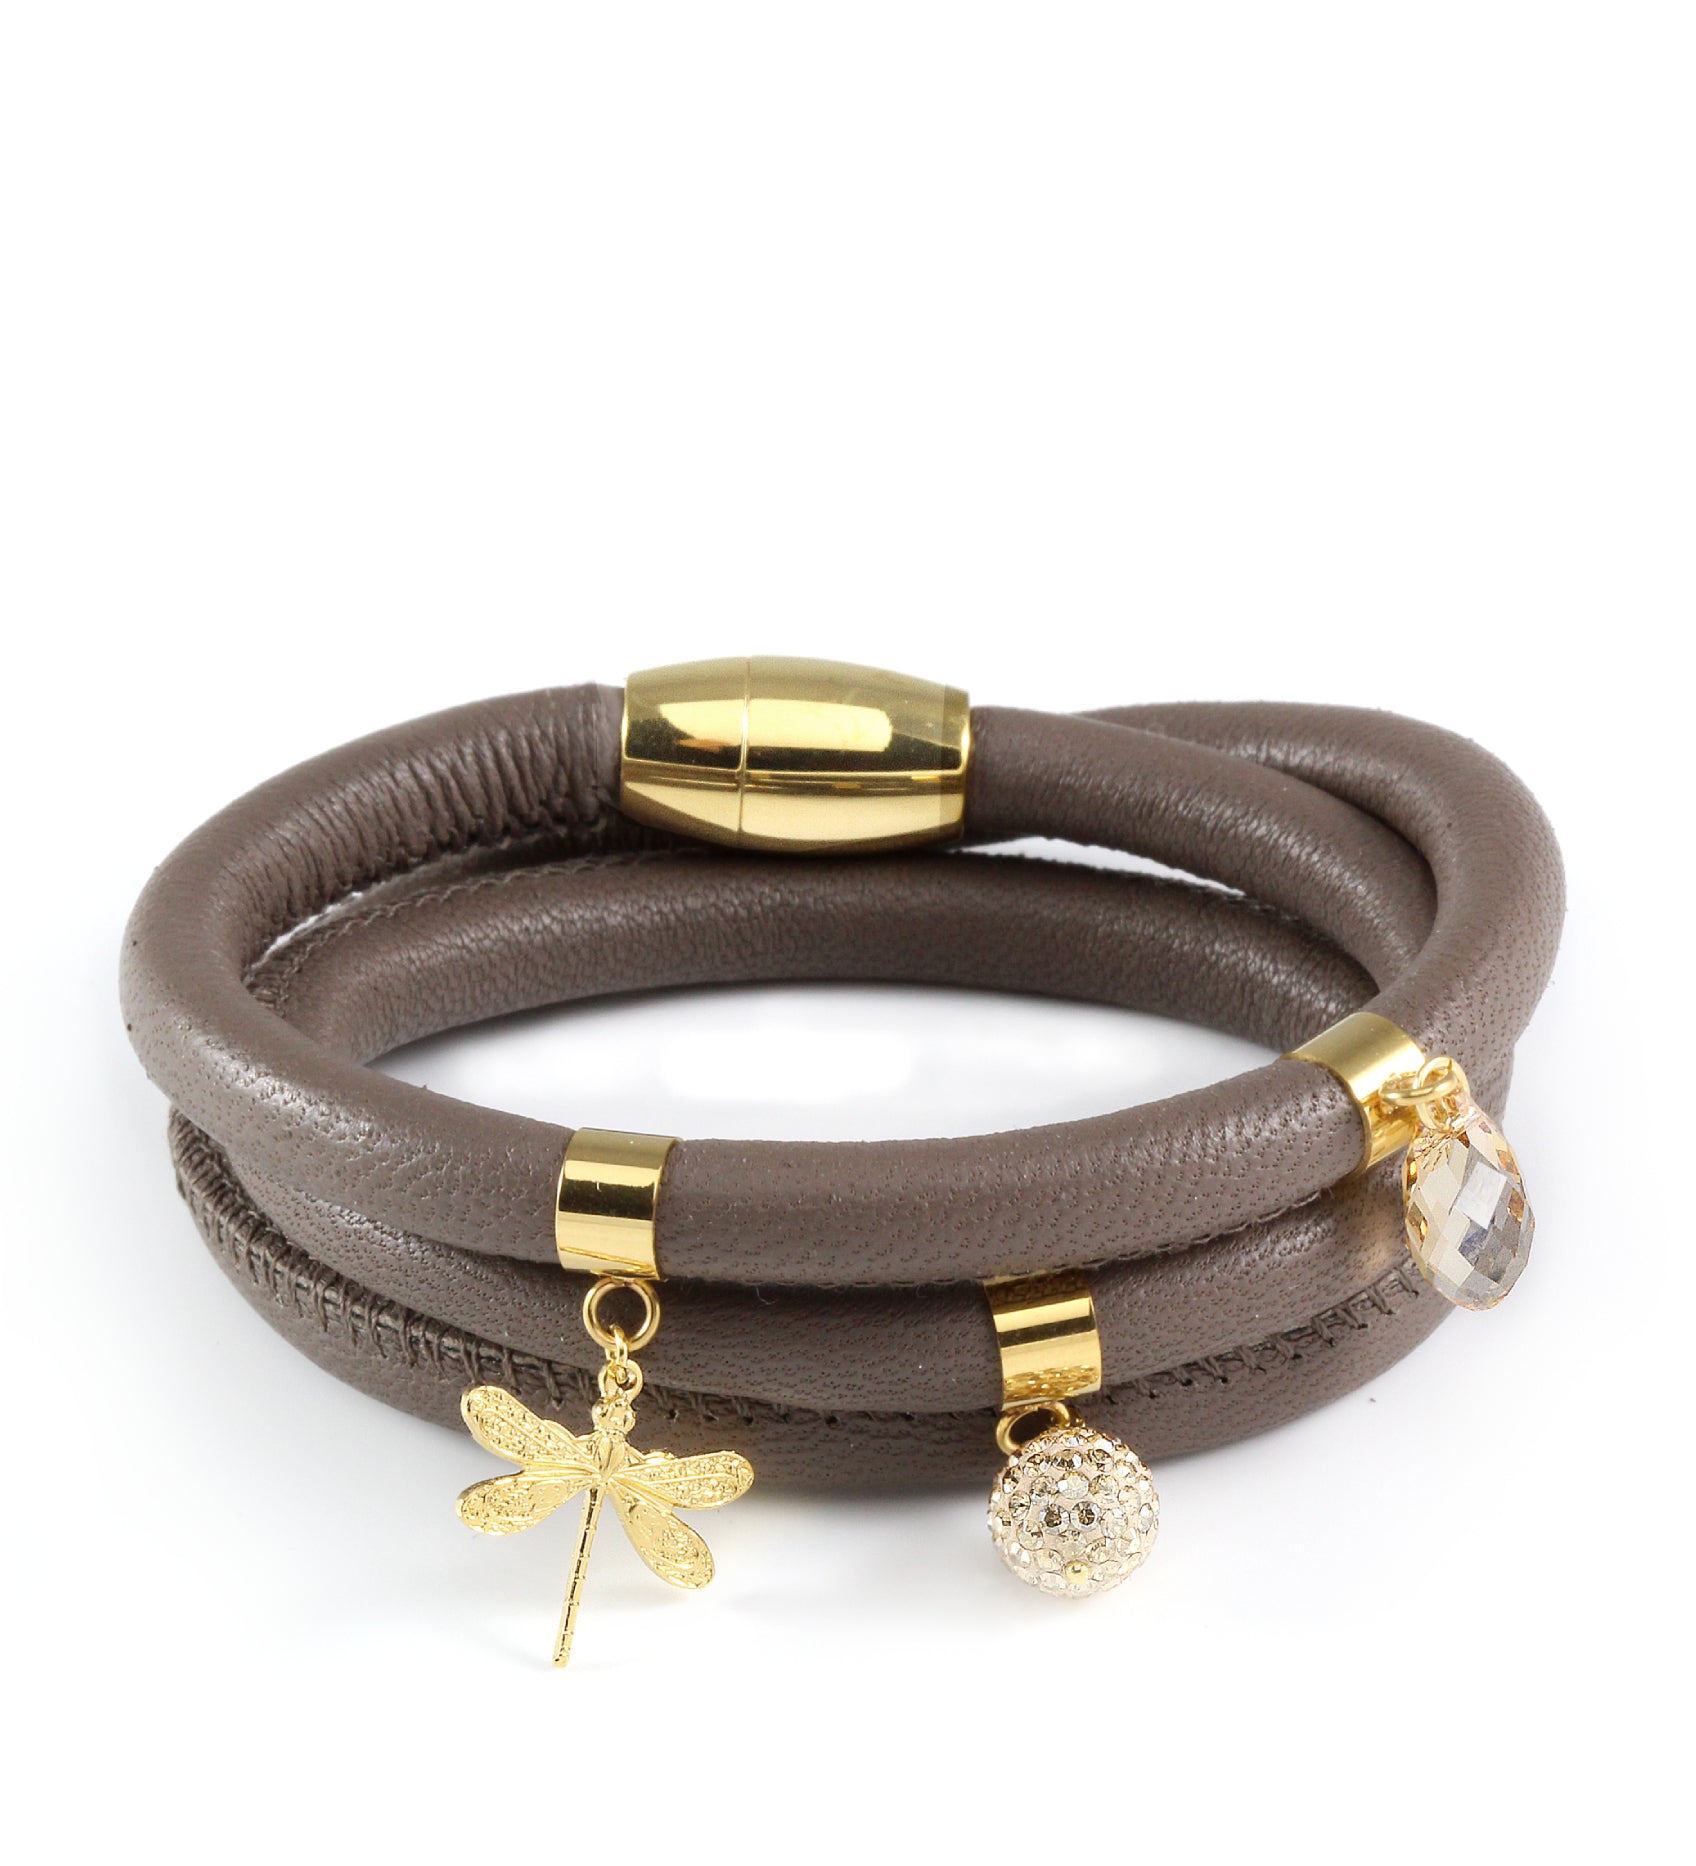 MEN/ Women Wrinkled Design Genuine Leather Wristband/ Leather Bracelet  7-8.3